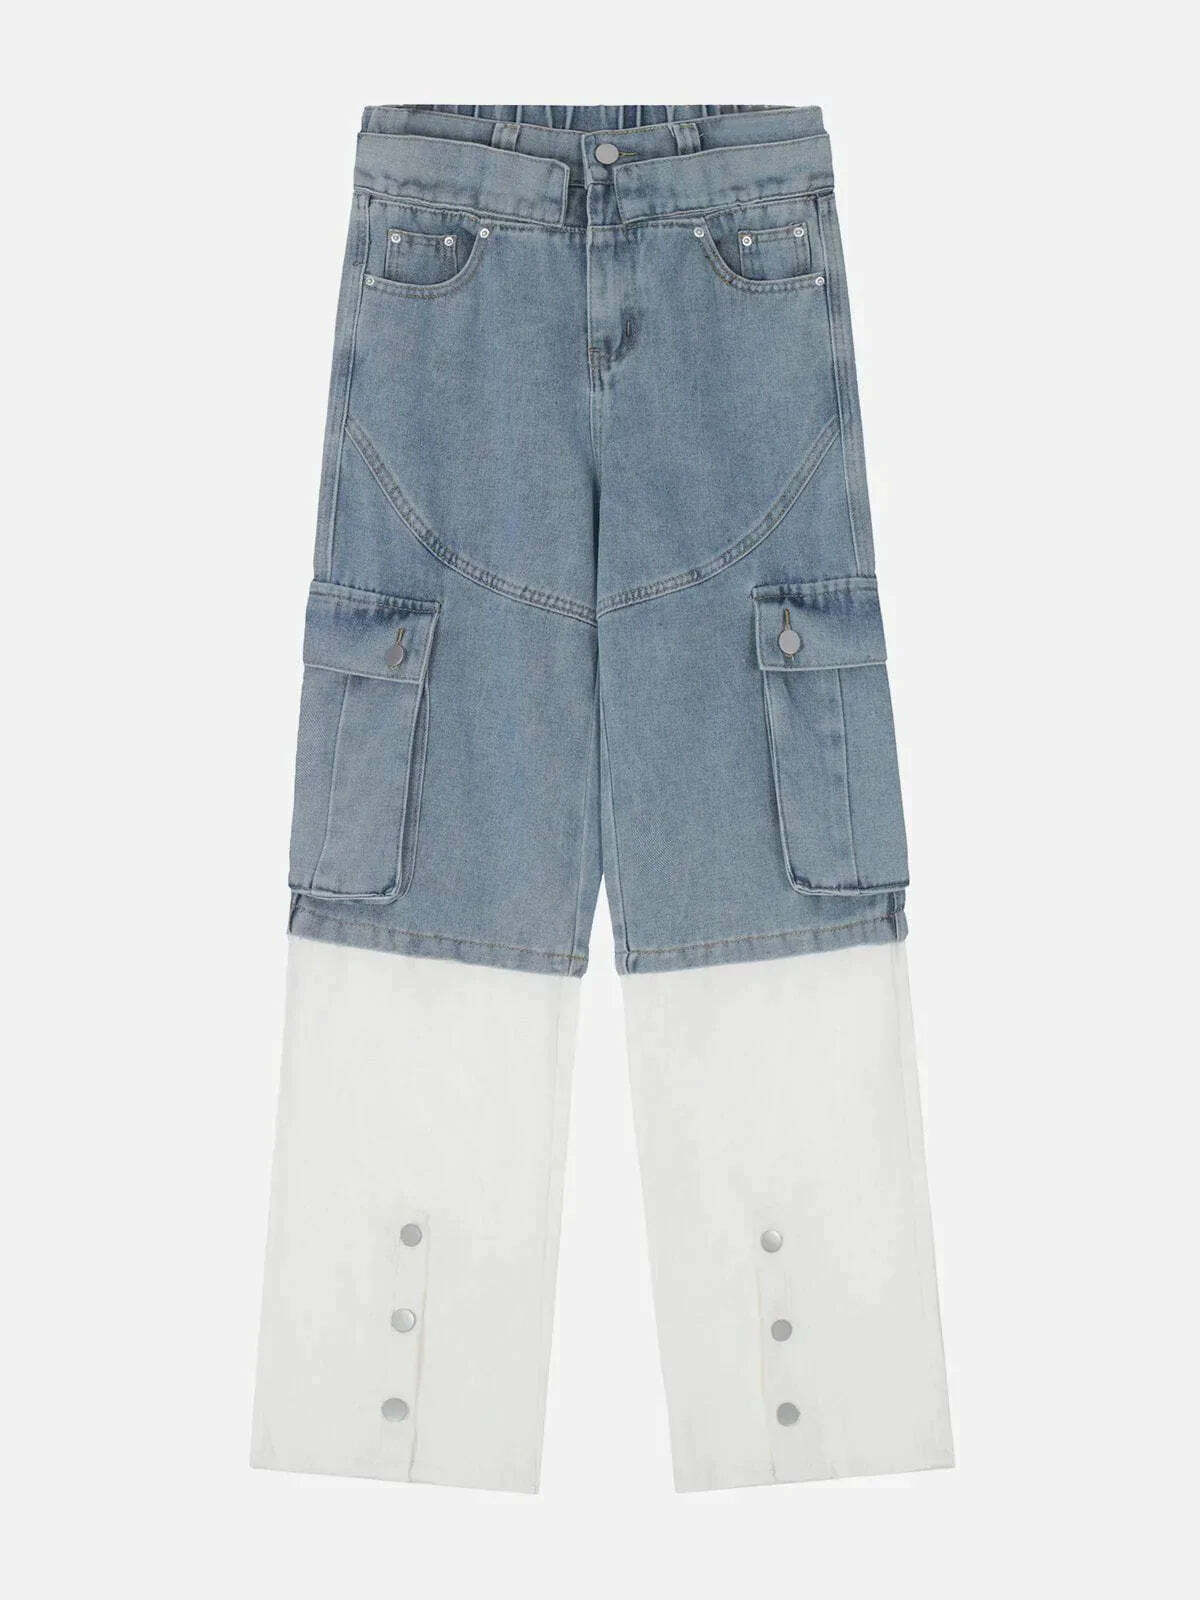 patchwork denim jeans vintage & edgy urban style 5086